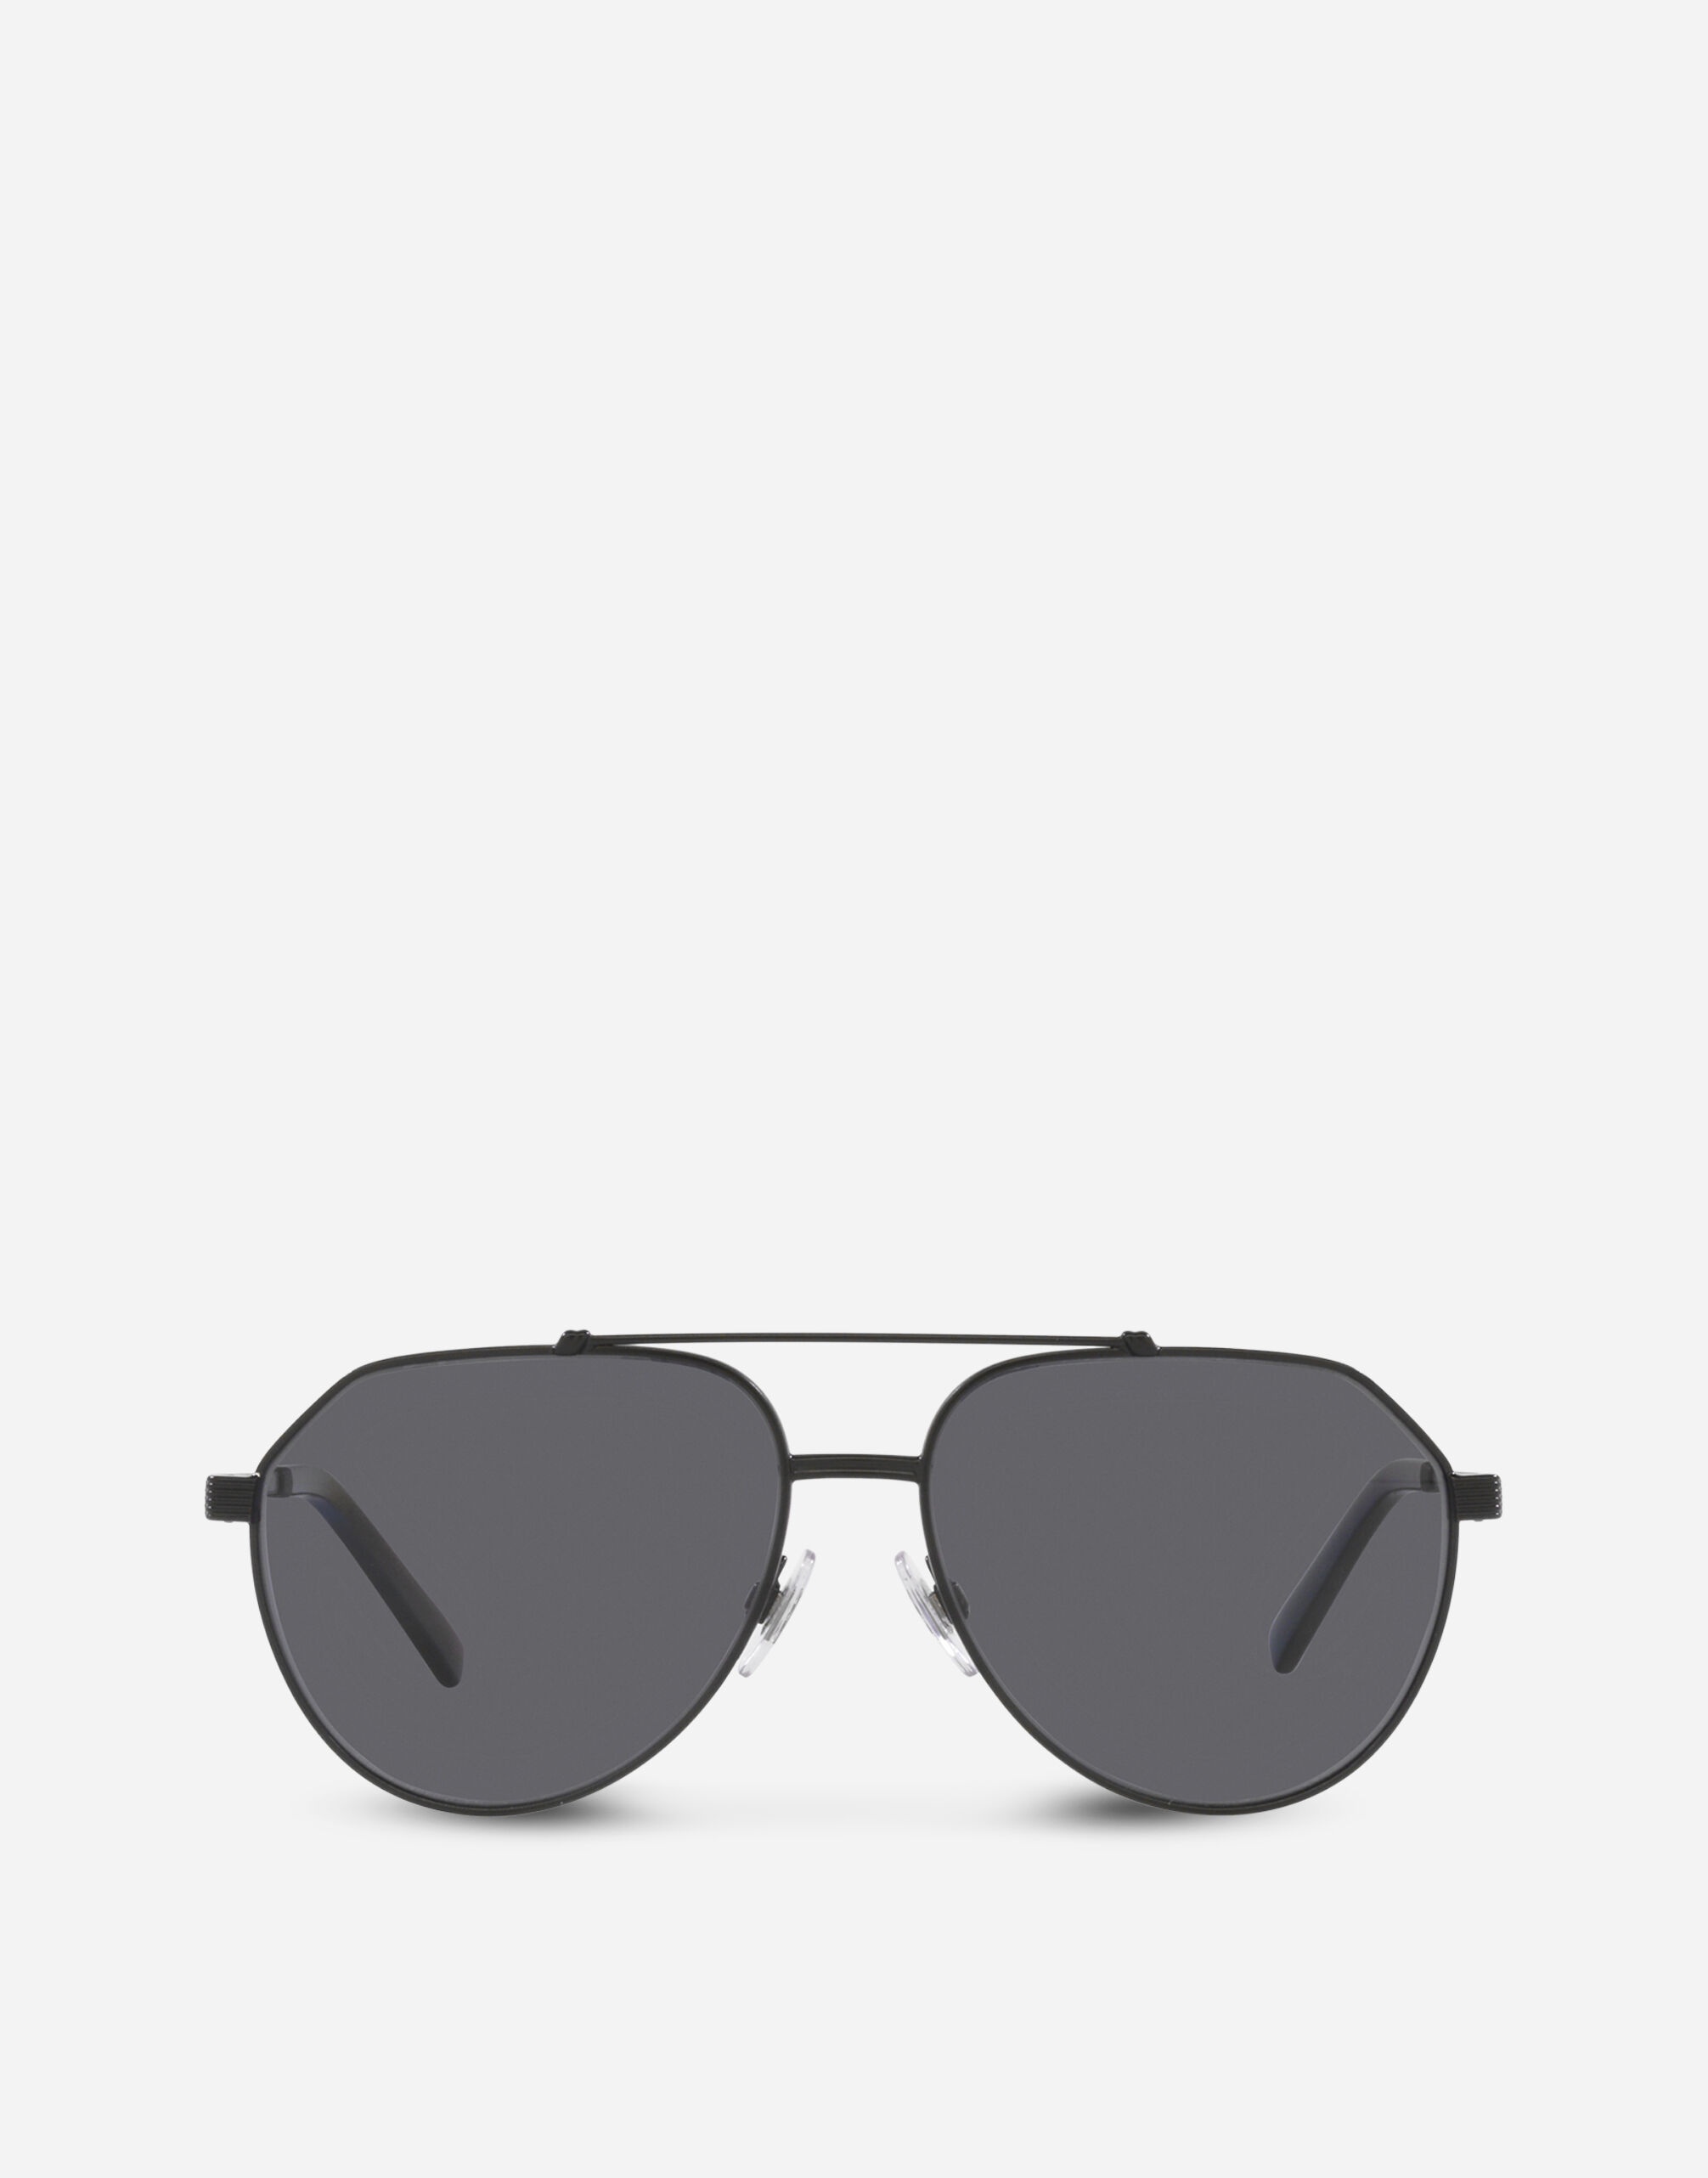 Gros grain sunglasses - 1